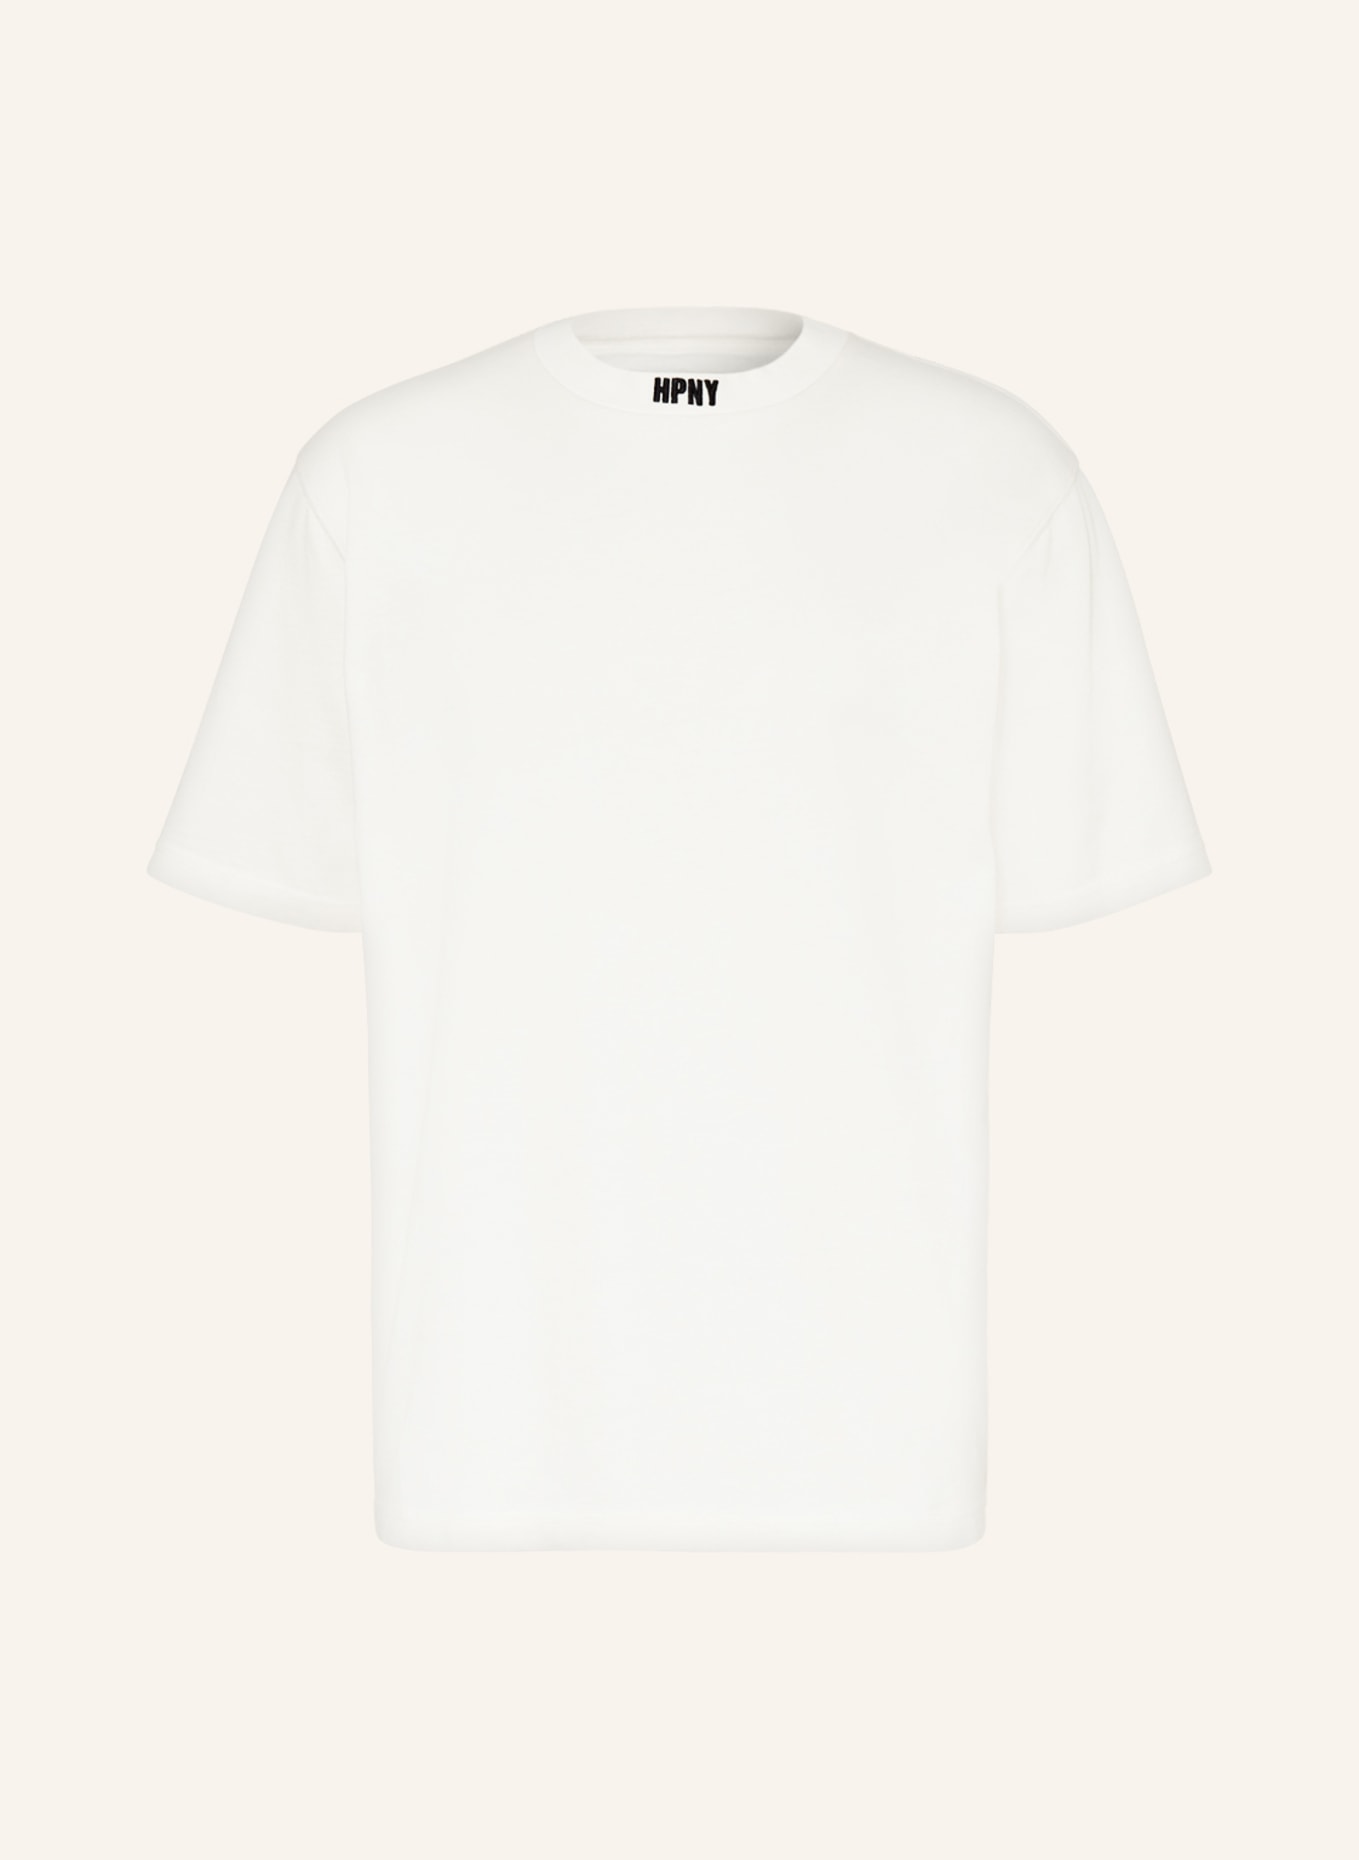 HERON PRESTON T-Shirt HPNY EMB, Farbe: ECRU (Bild 1)